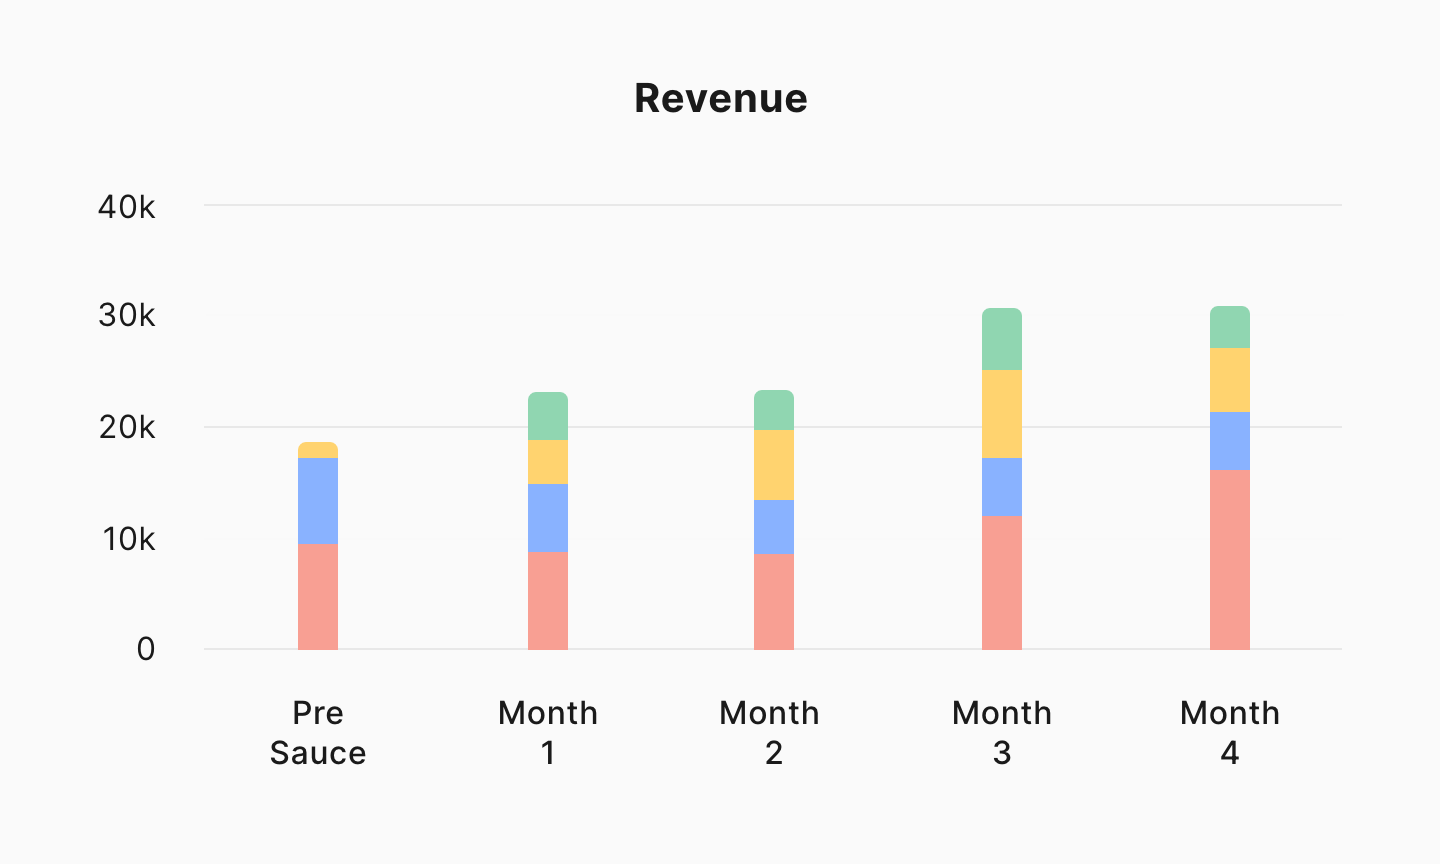 Key for revenue line graph: Uber Eats, GrubHub, Doordash, Postmates